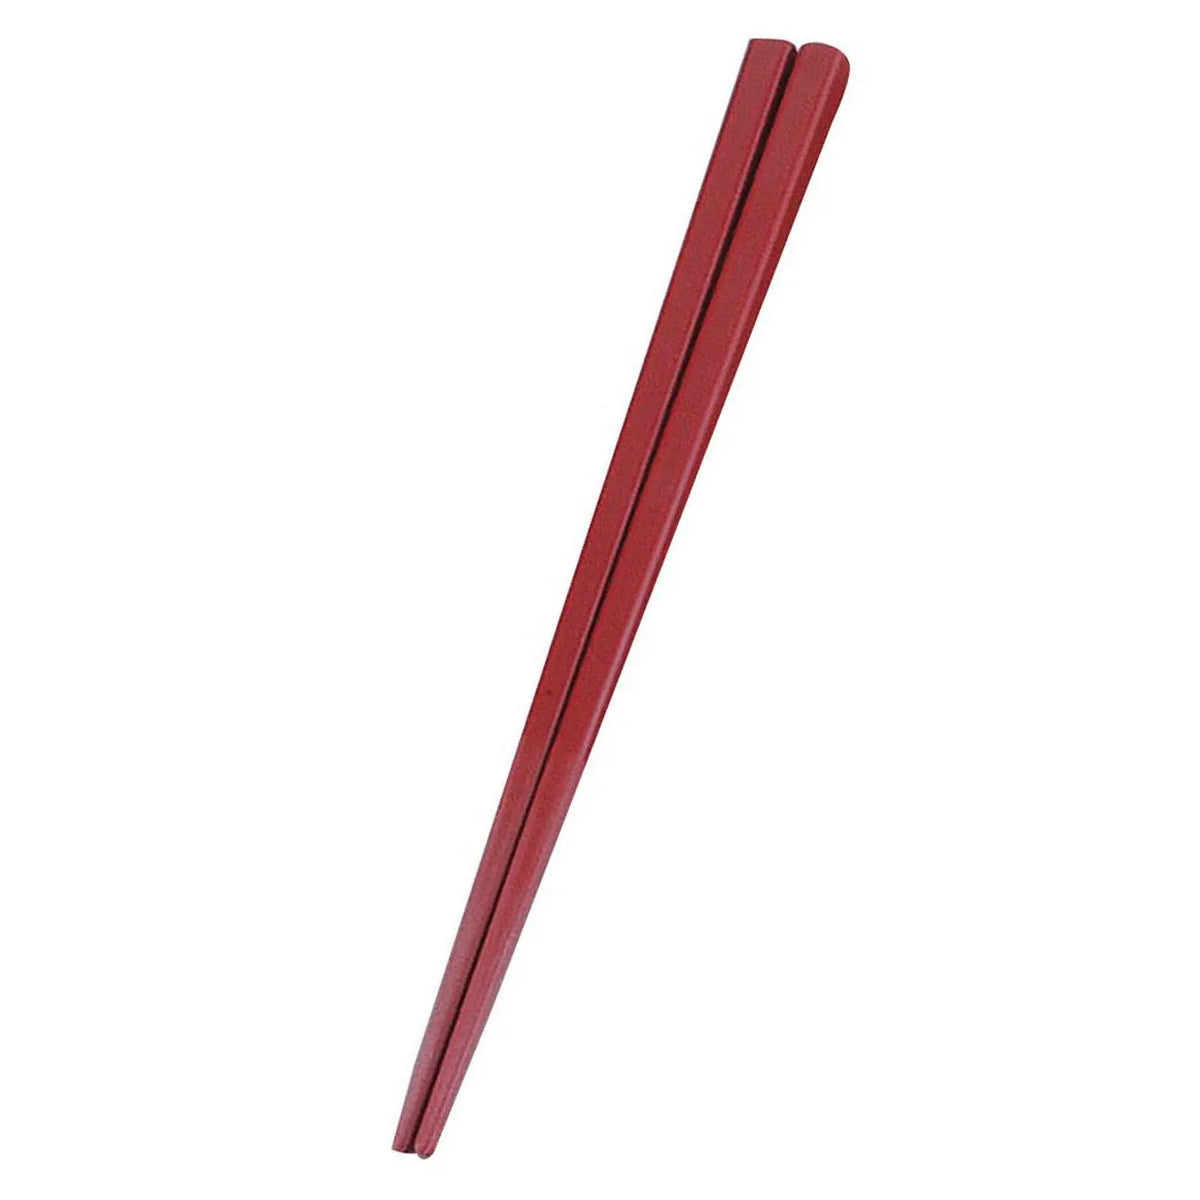 KANTOH PLASTIC Polycarbonate Non-Slip Chopsticks